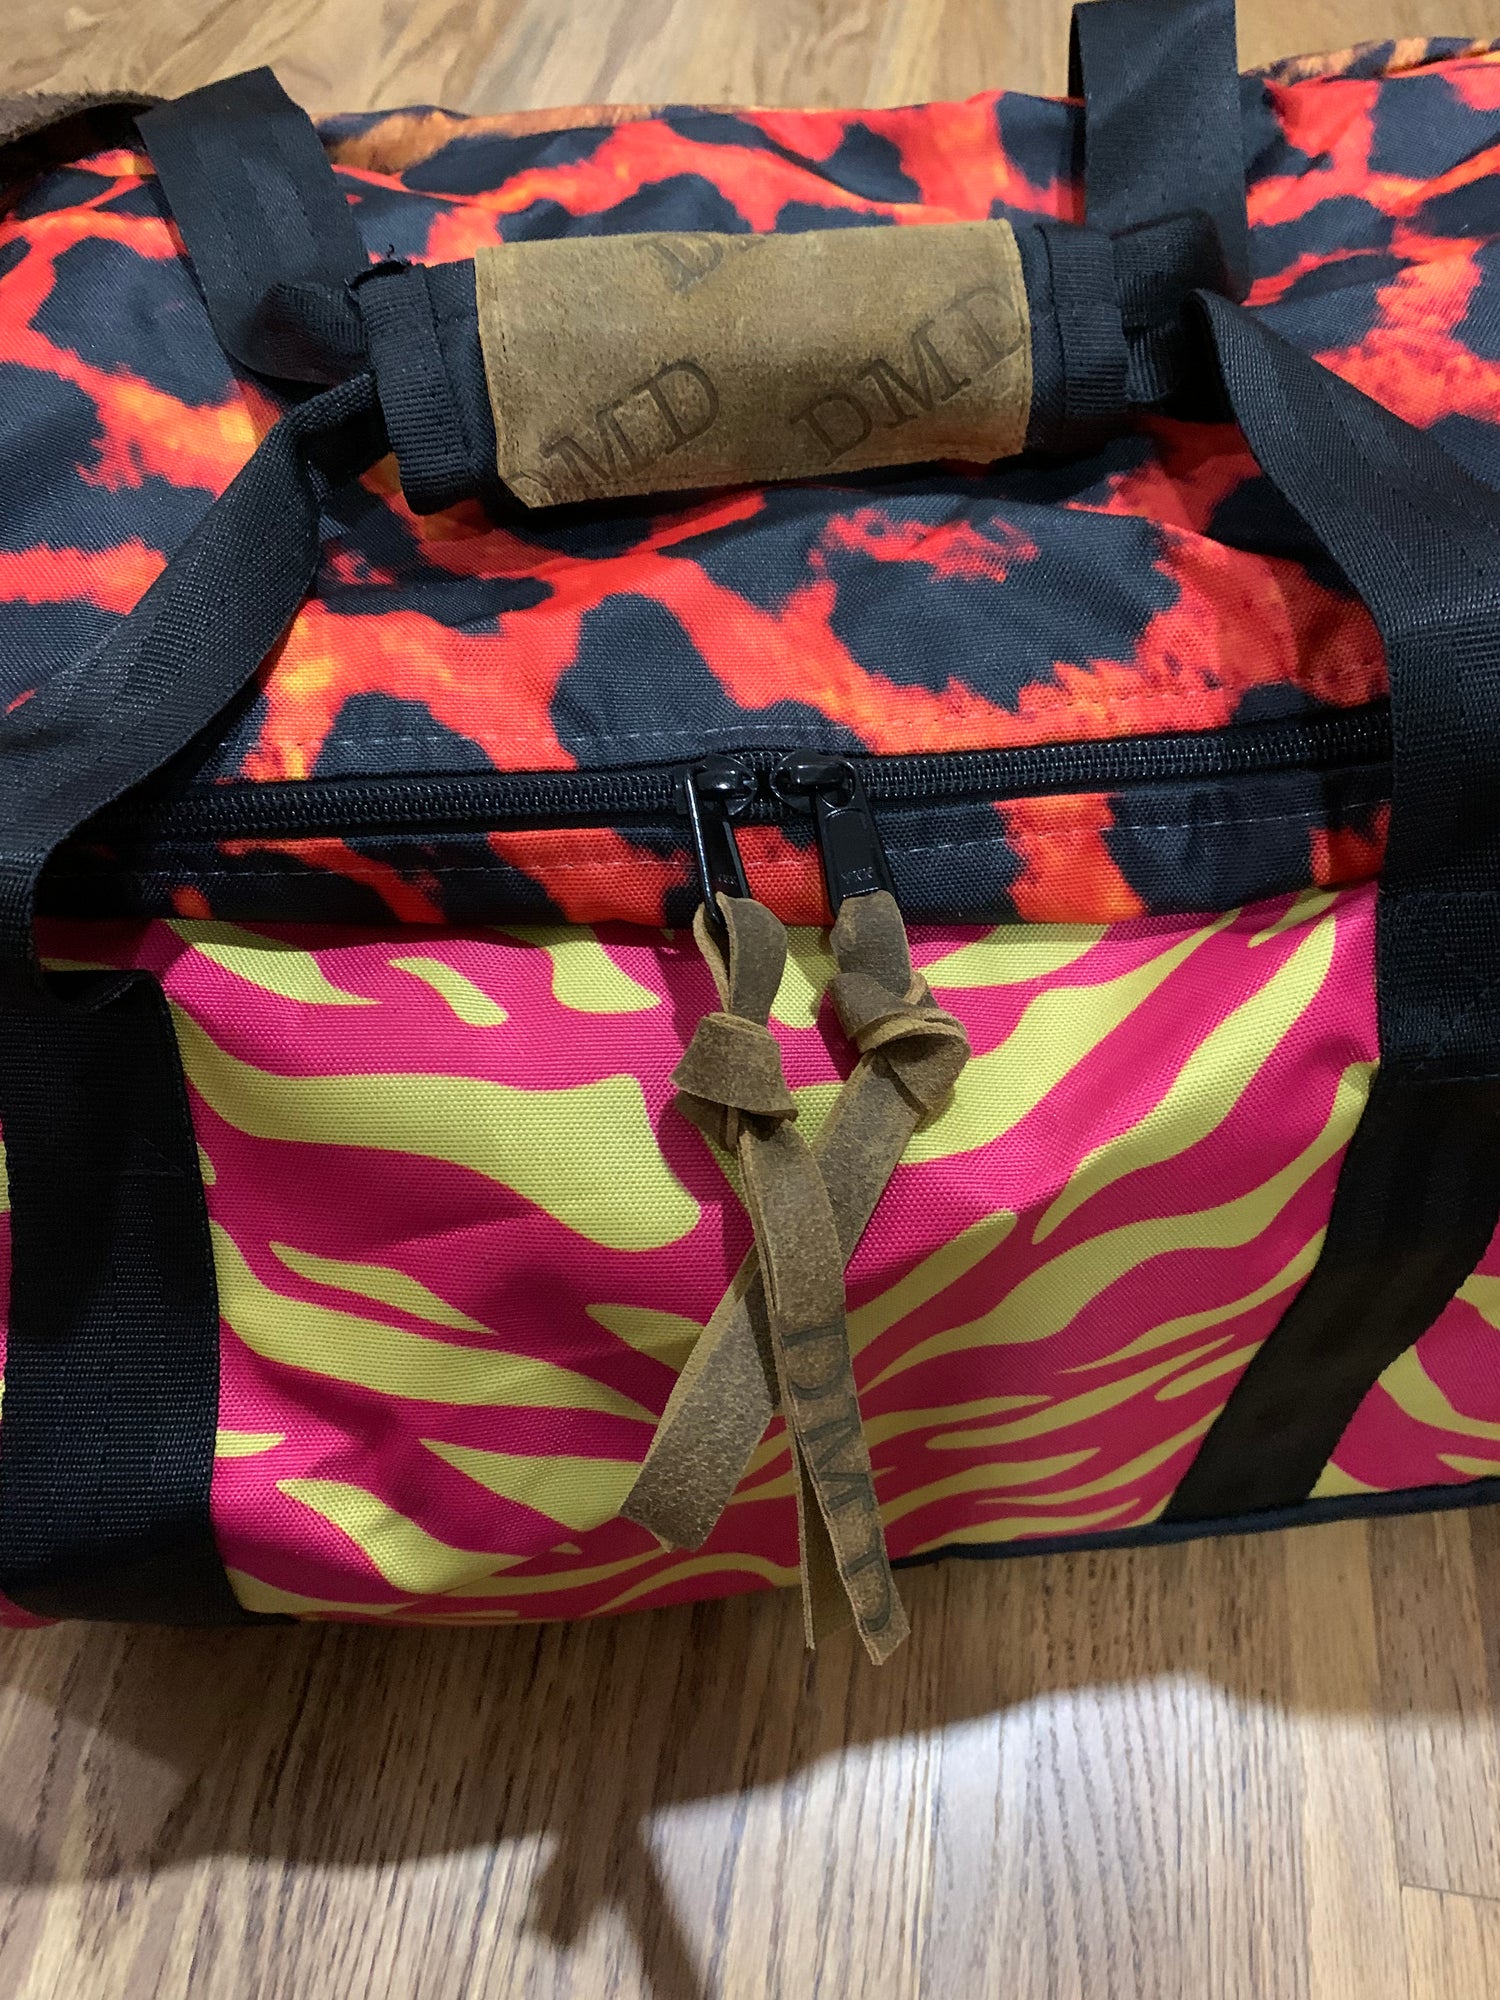 DMD Bags Louisiana Made! Handbags and Travel Accessories